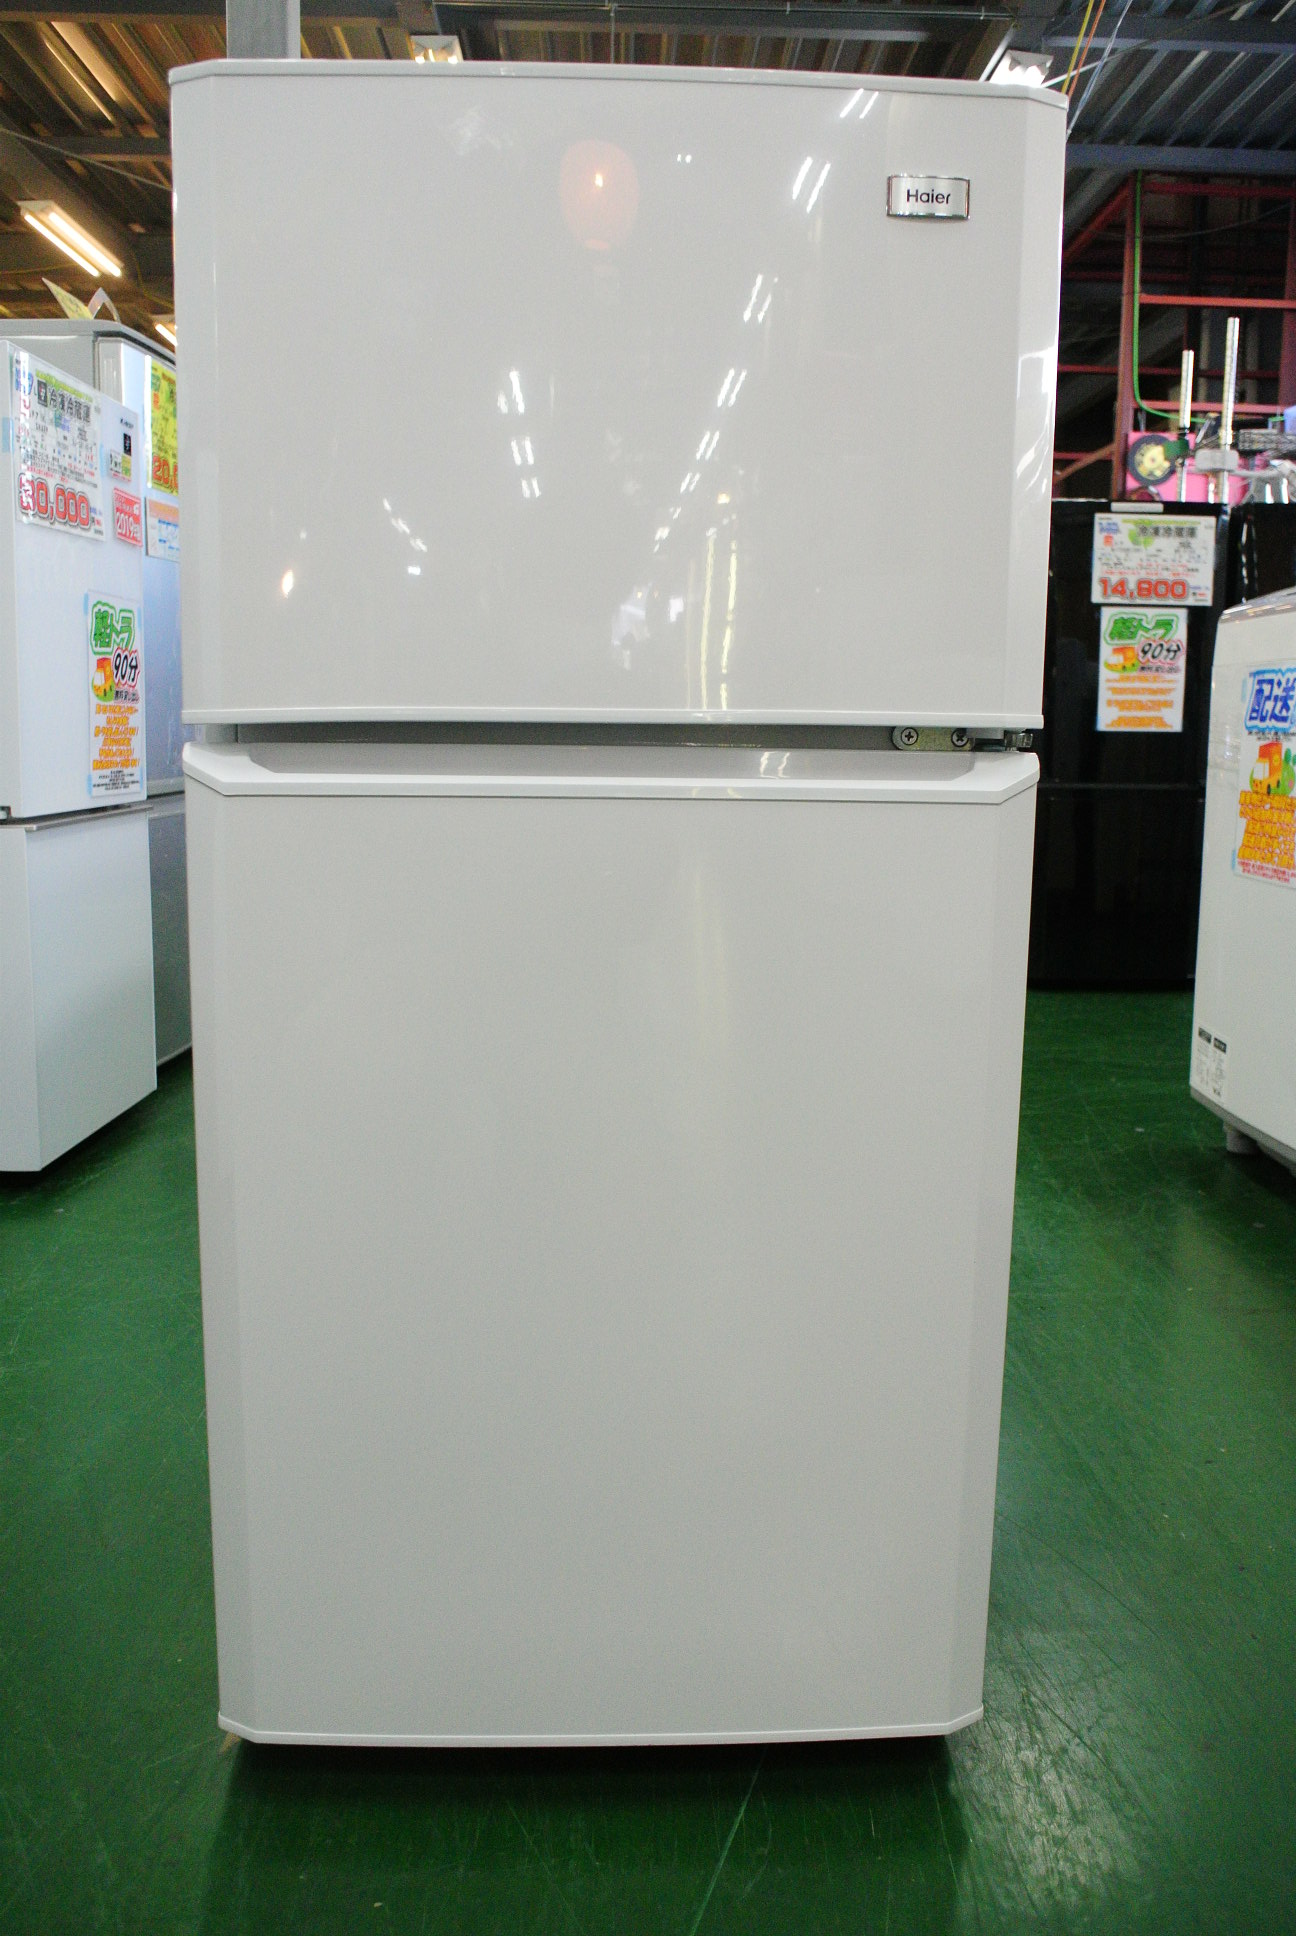 Haier(ハイアール)106L 2ドア冷蔵庫 JR-N106K 2015年製。安い中古 